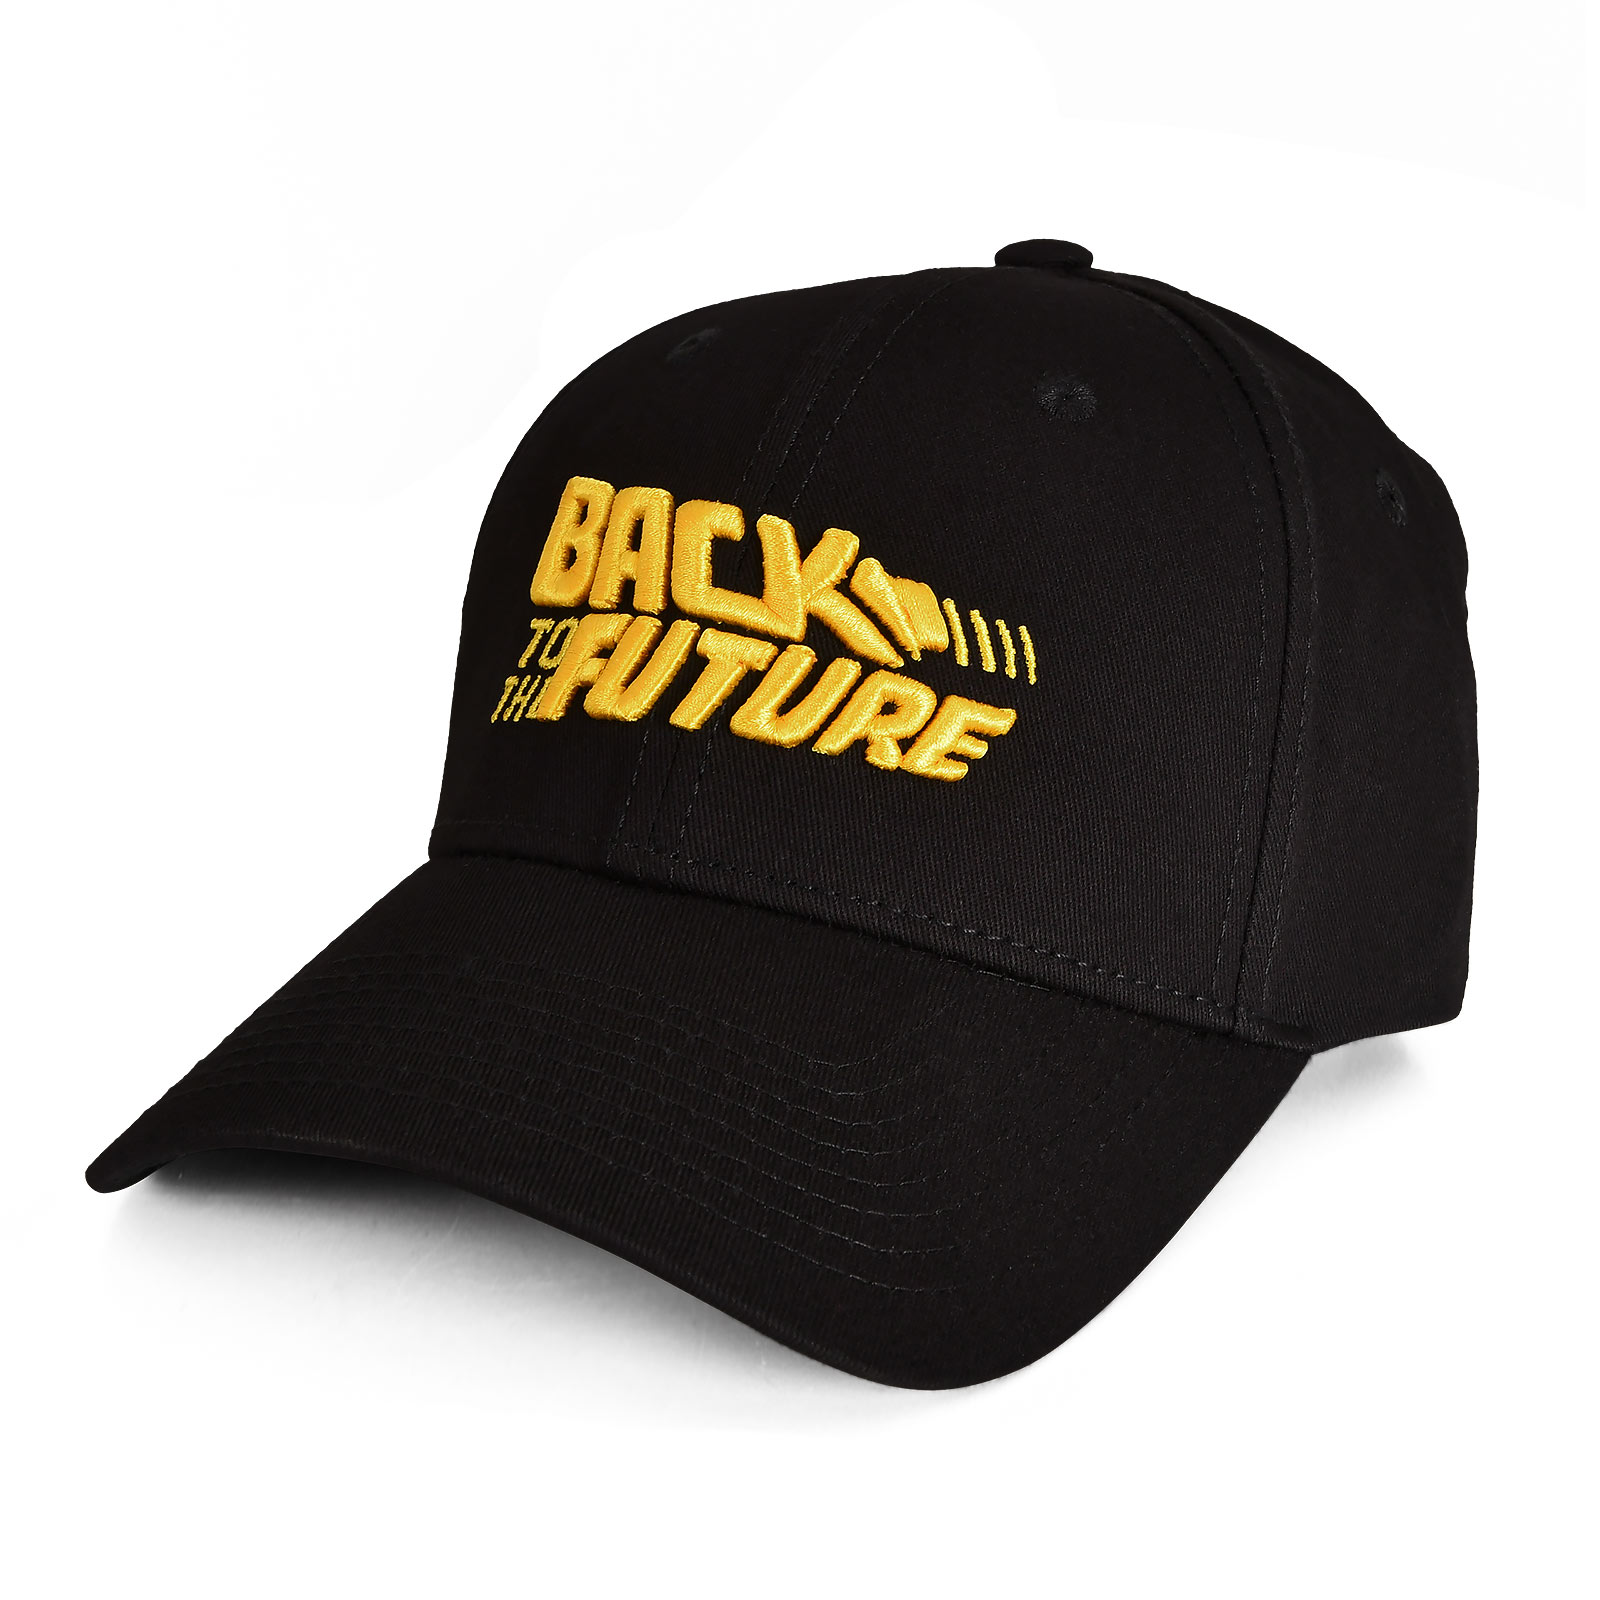 Back to the Future - Movie Logo Cap